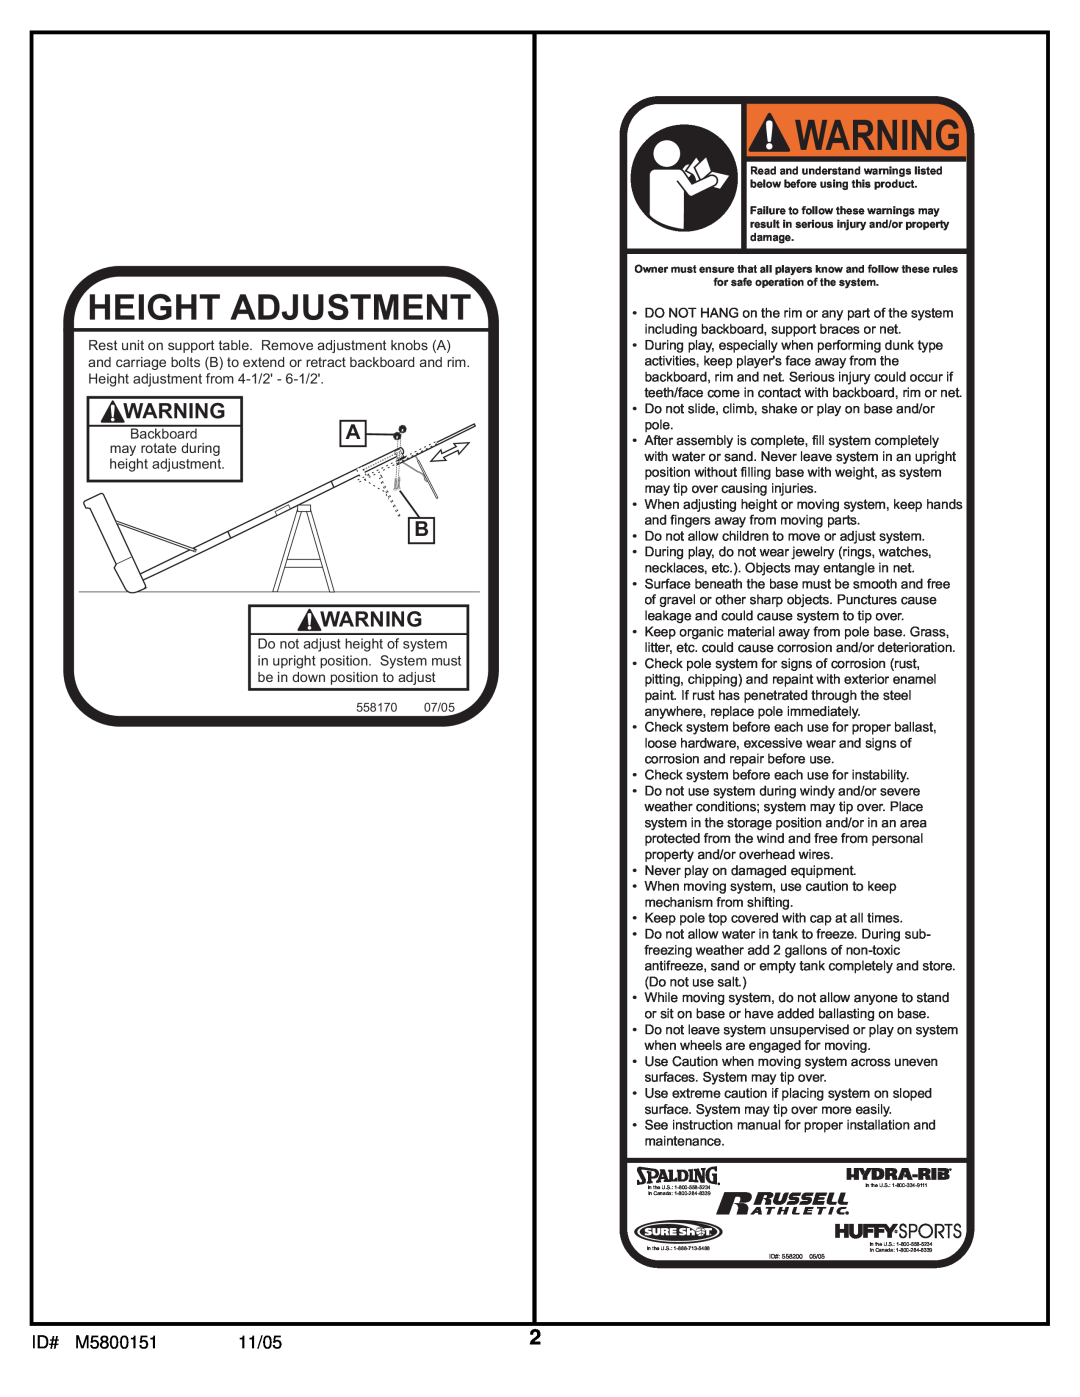 Huffy M5800152 manual Height Adjustment, ID# M5800151, 11/05 